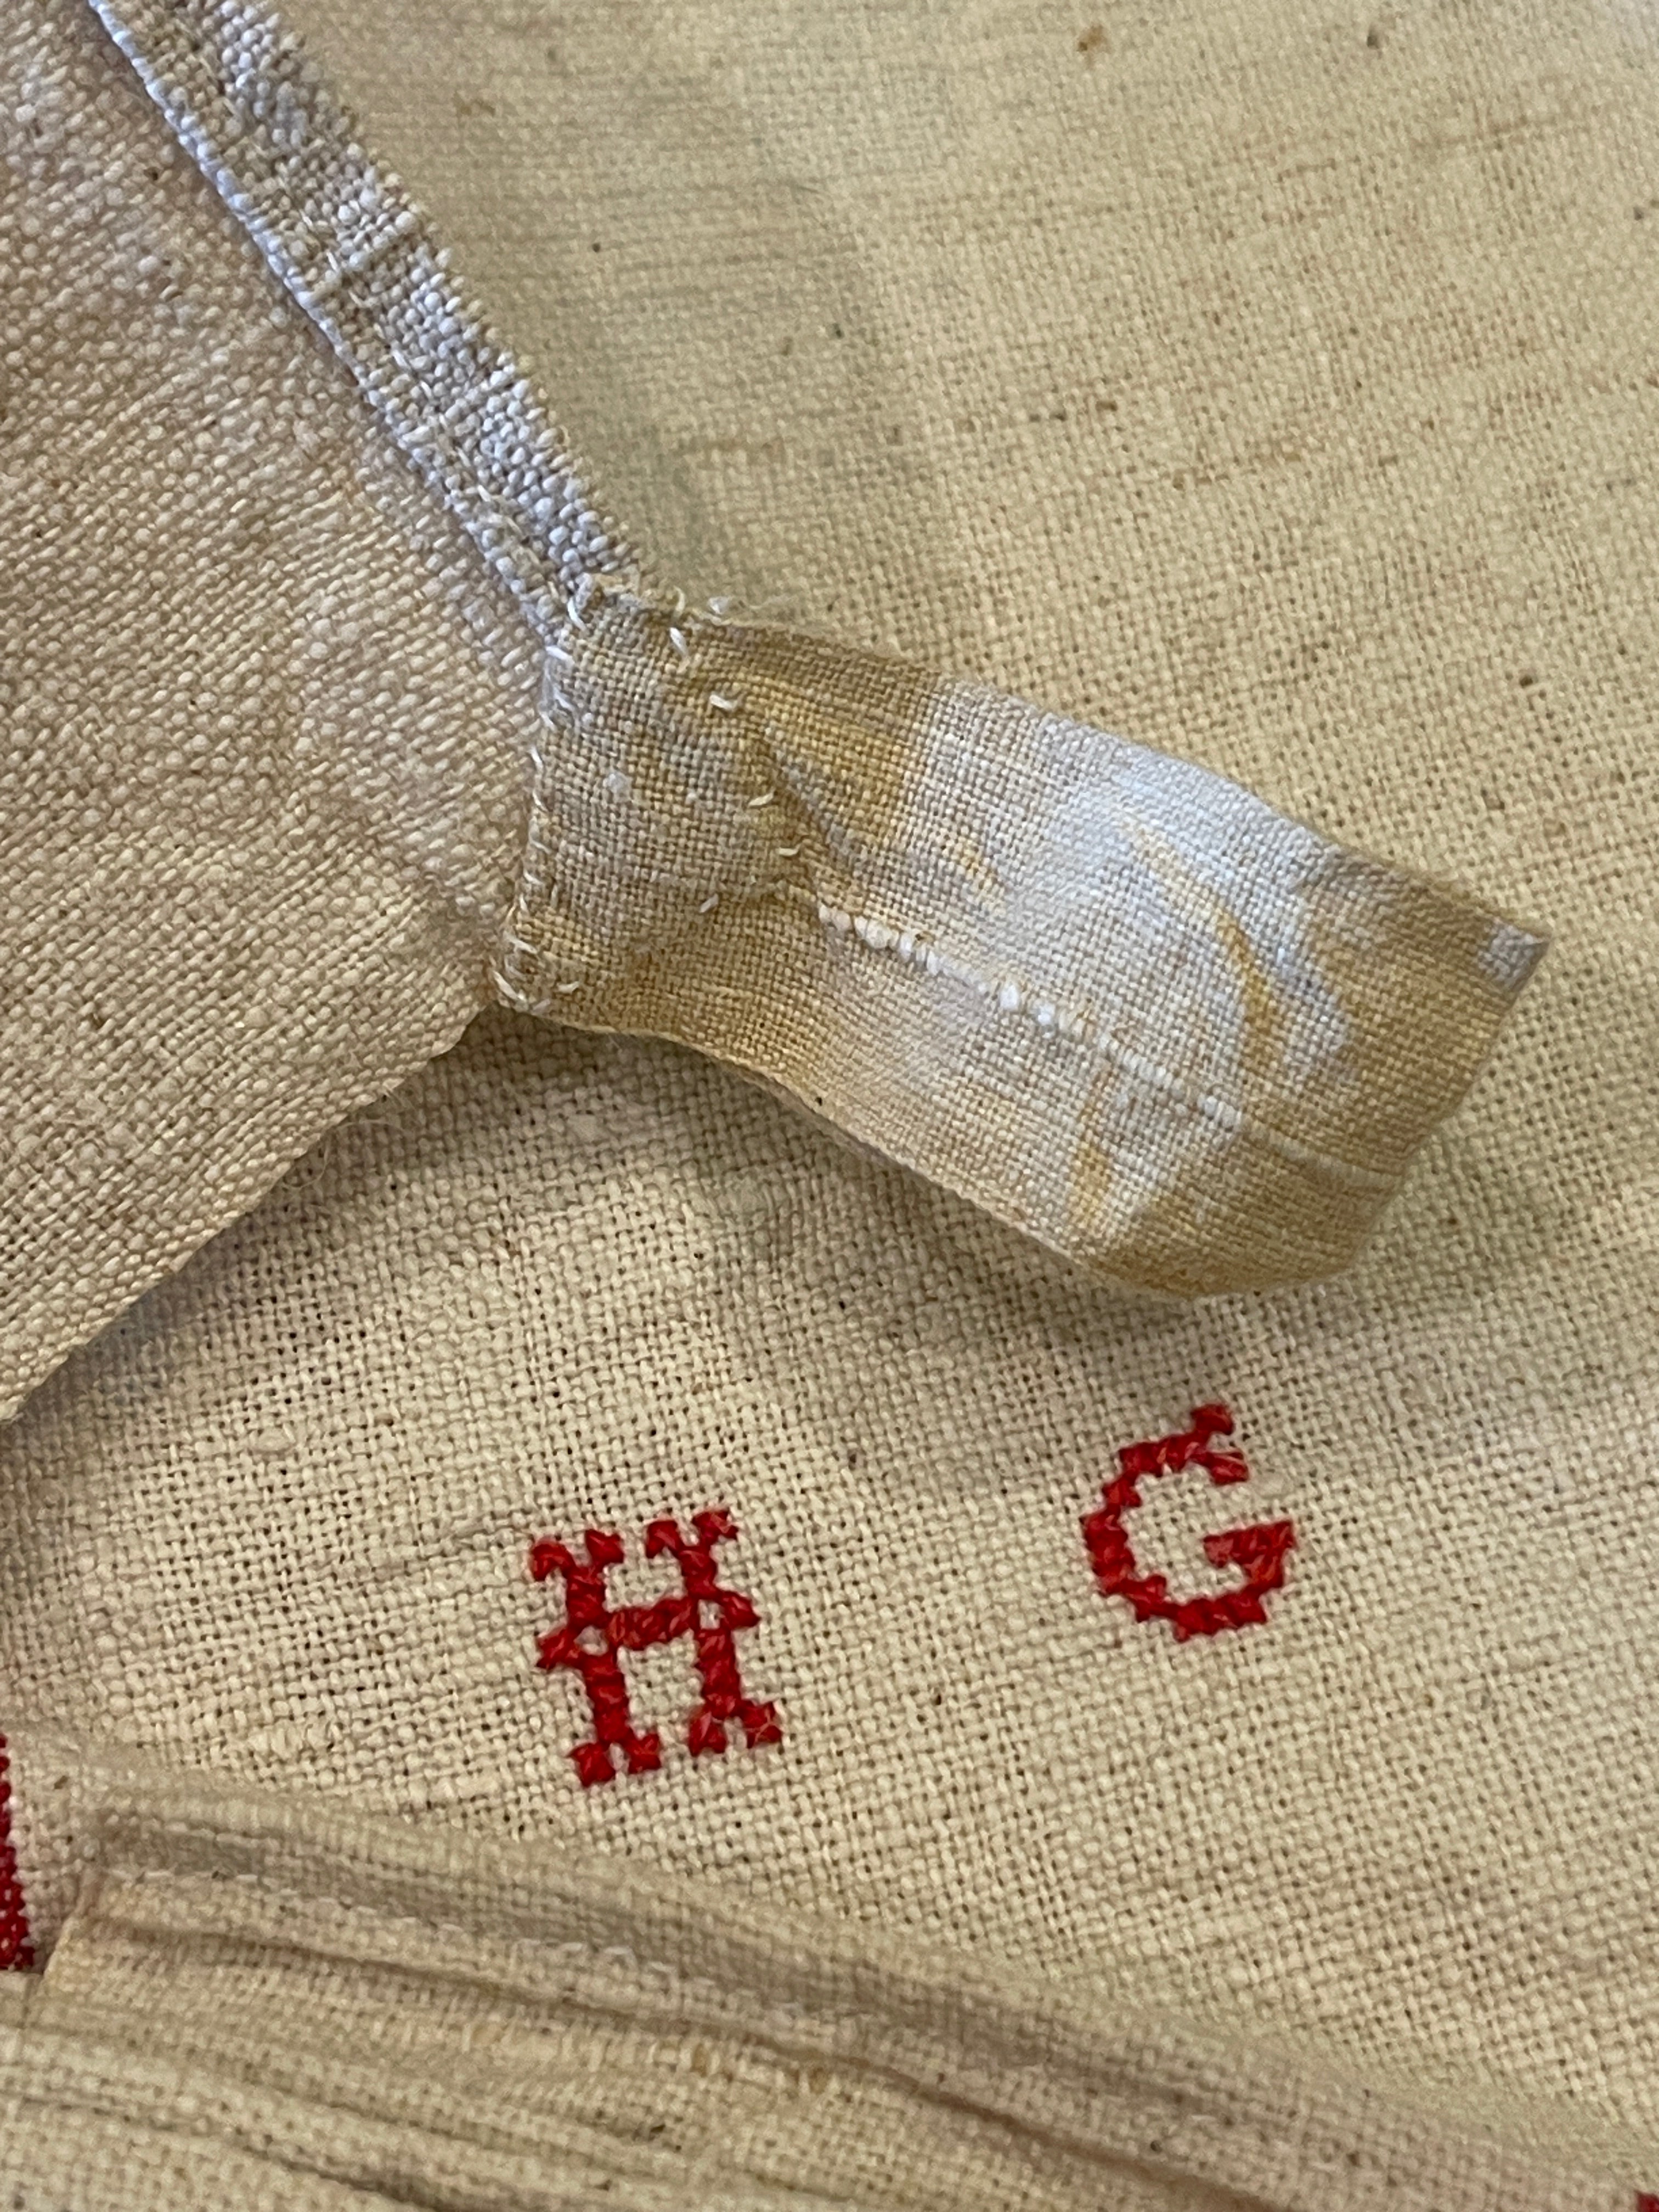 Antique Linen/Hemp Red Striped Torchon  - HG